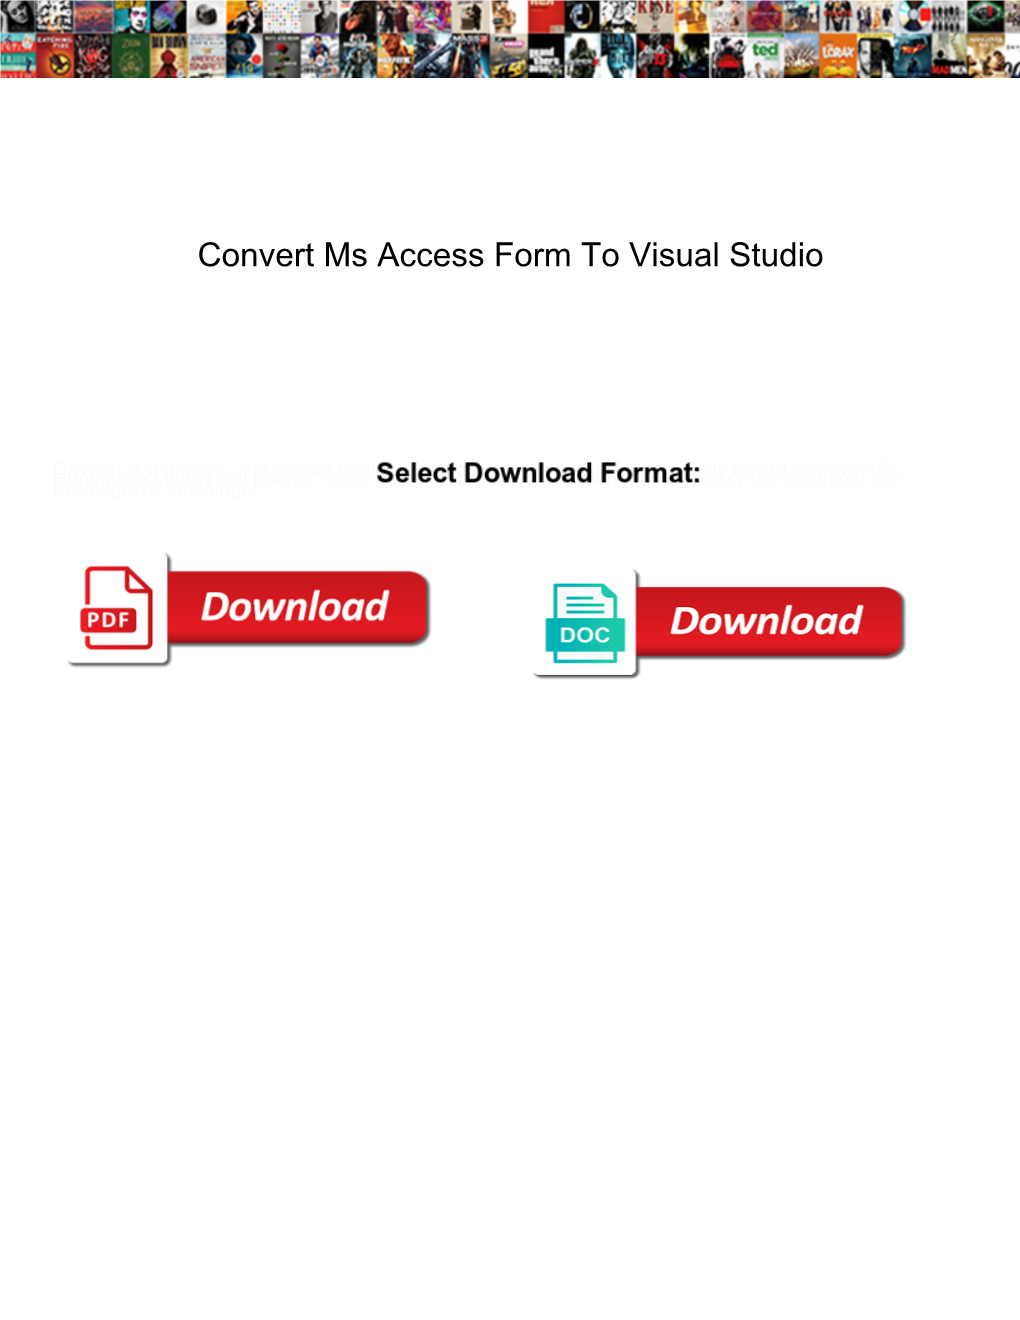 Convert Ms Access Form to Visual Studio